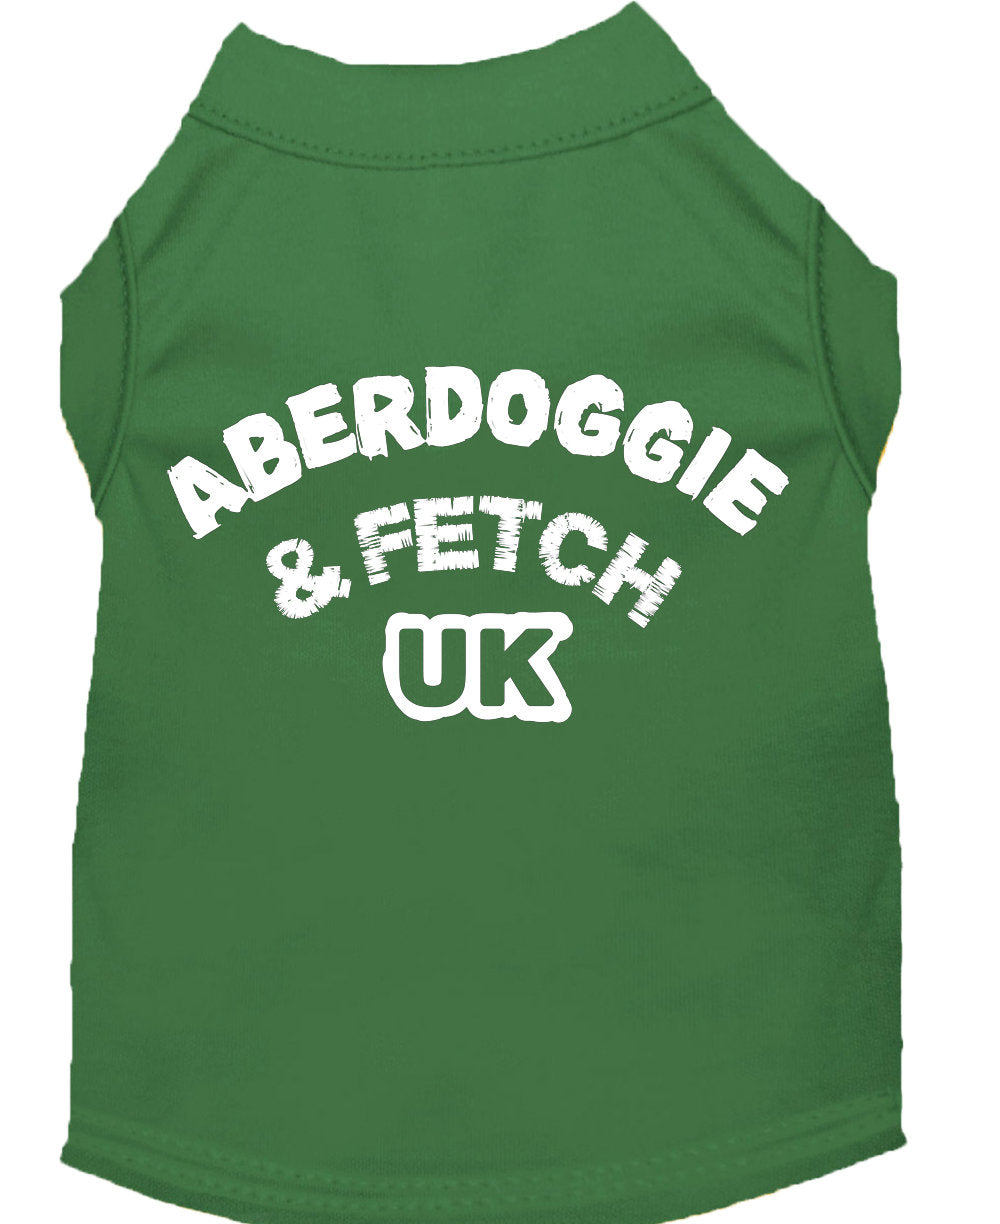 Pet Dog & Cat Shirt Screen Printed, "Aberdoggie and Fetch UK"